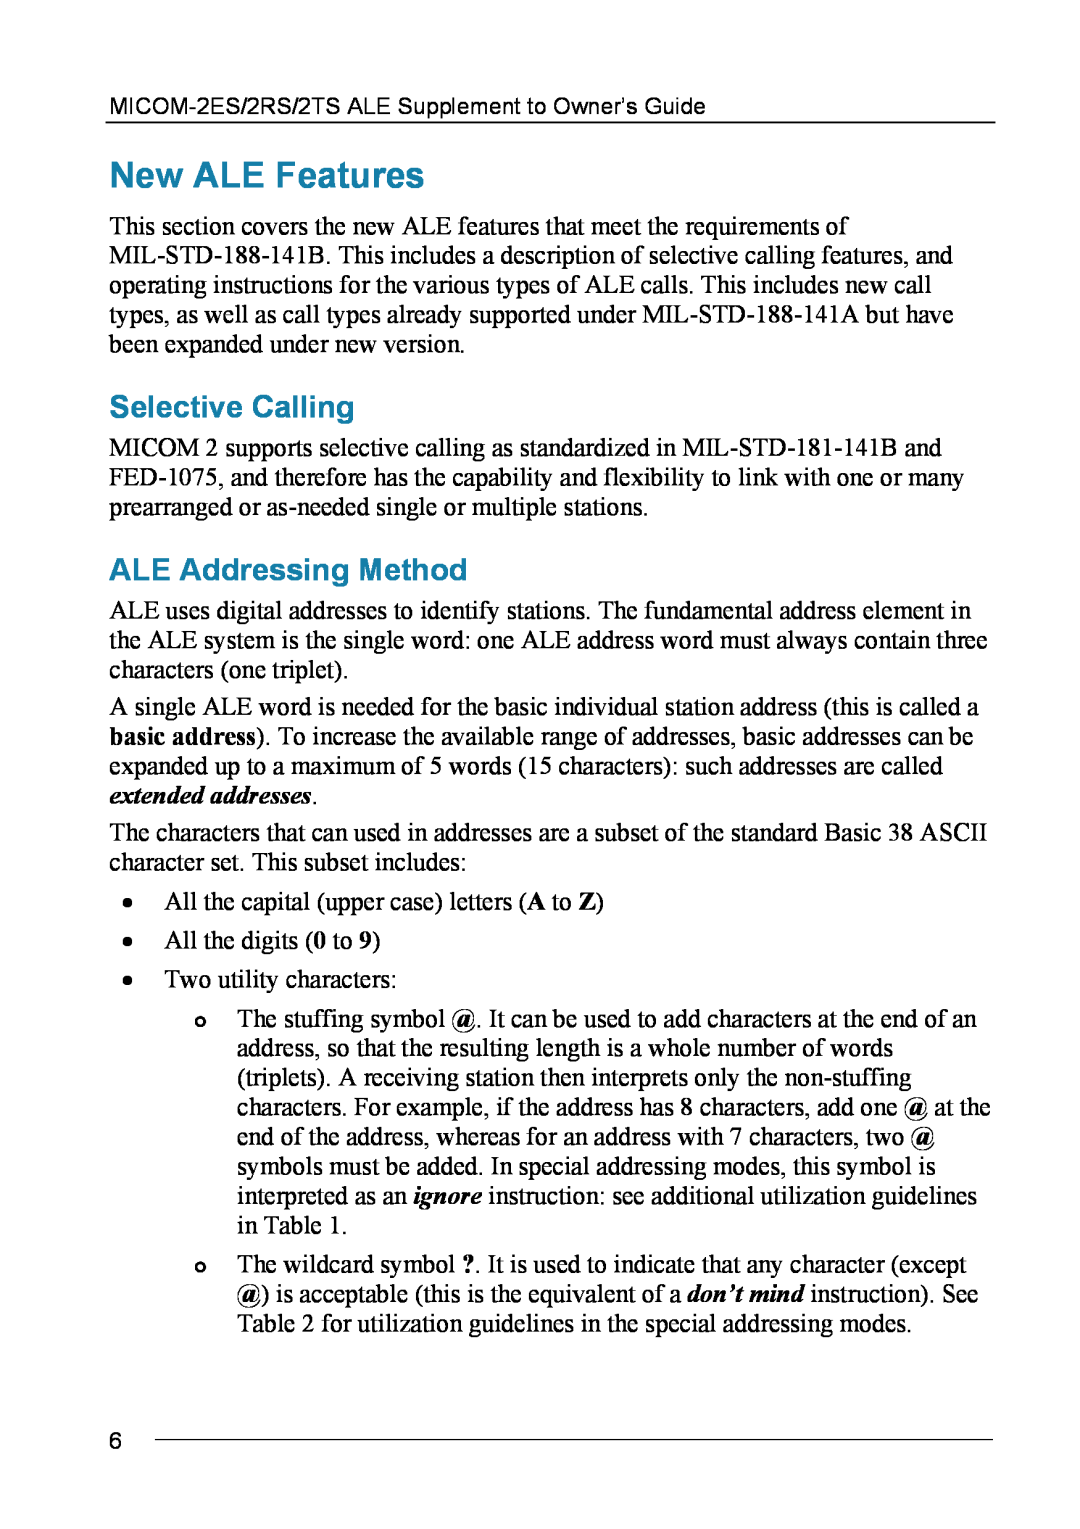 Motorola MICOM-2ES/2RS/2TS ALE manual New ALE Features, Selective Calling, ALE Addressing Method 